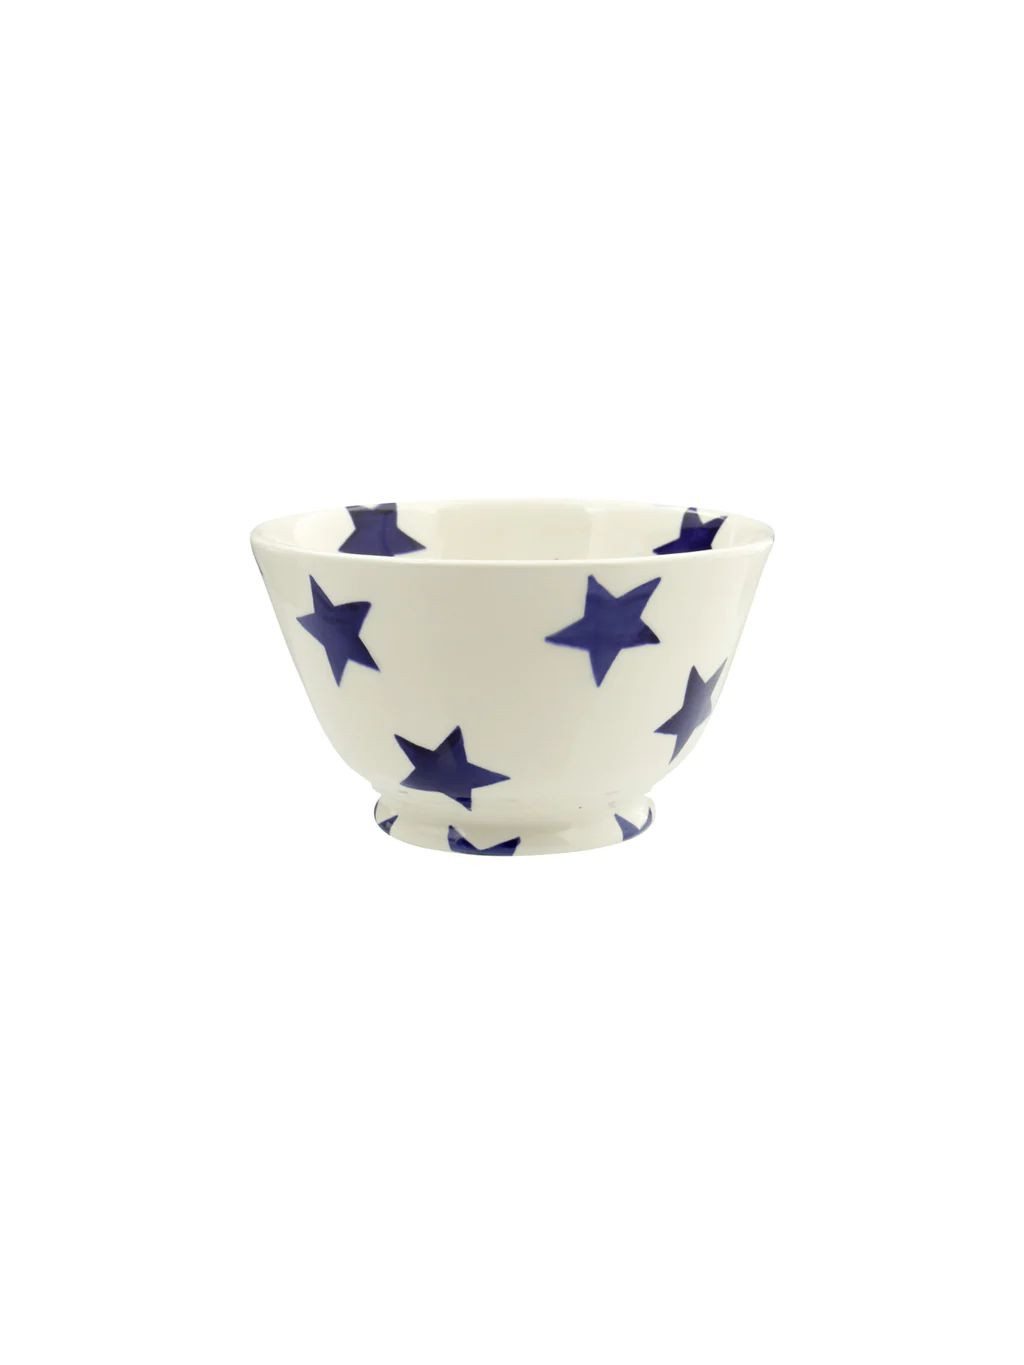 Emma Bridgewater Blue Star Small Old Bowl | Weston Table